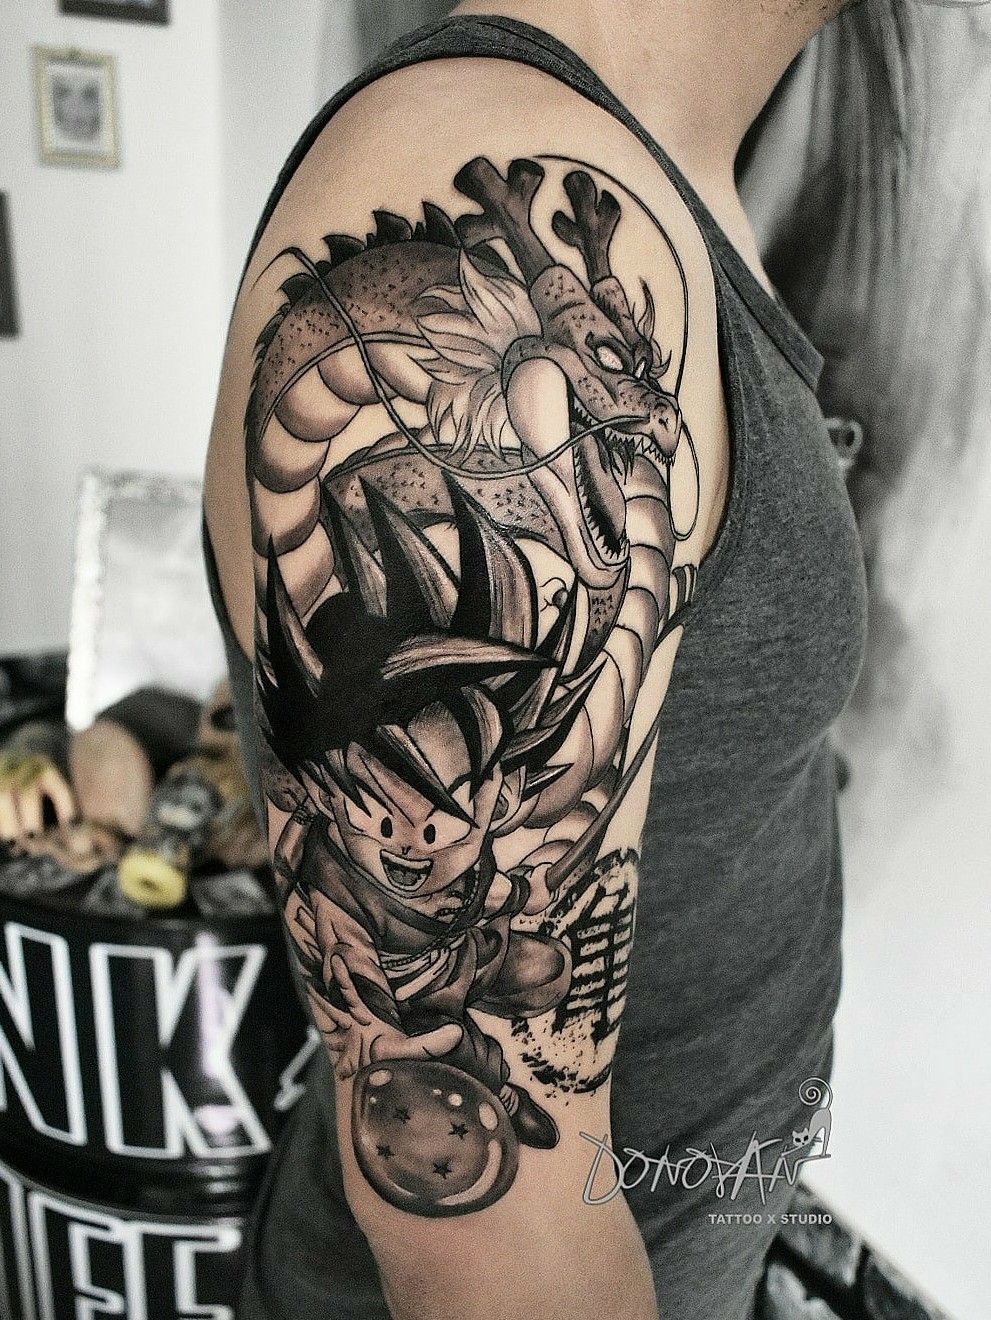 Tattoo uploaded by DONOVAN TATTOO'S • ????GOKU & Shenlong ???? •Hecho en 2  días, 9 horas Contento de realizar este hermoso proyecto ???????????? #dragonball  #dragonballtattoo #goku #shenlong #shenlongtattoo #sombrastattoo  #animetattoo #tattooink #tatuajestunja ...